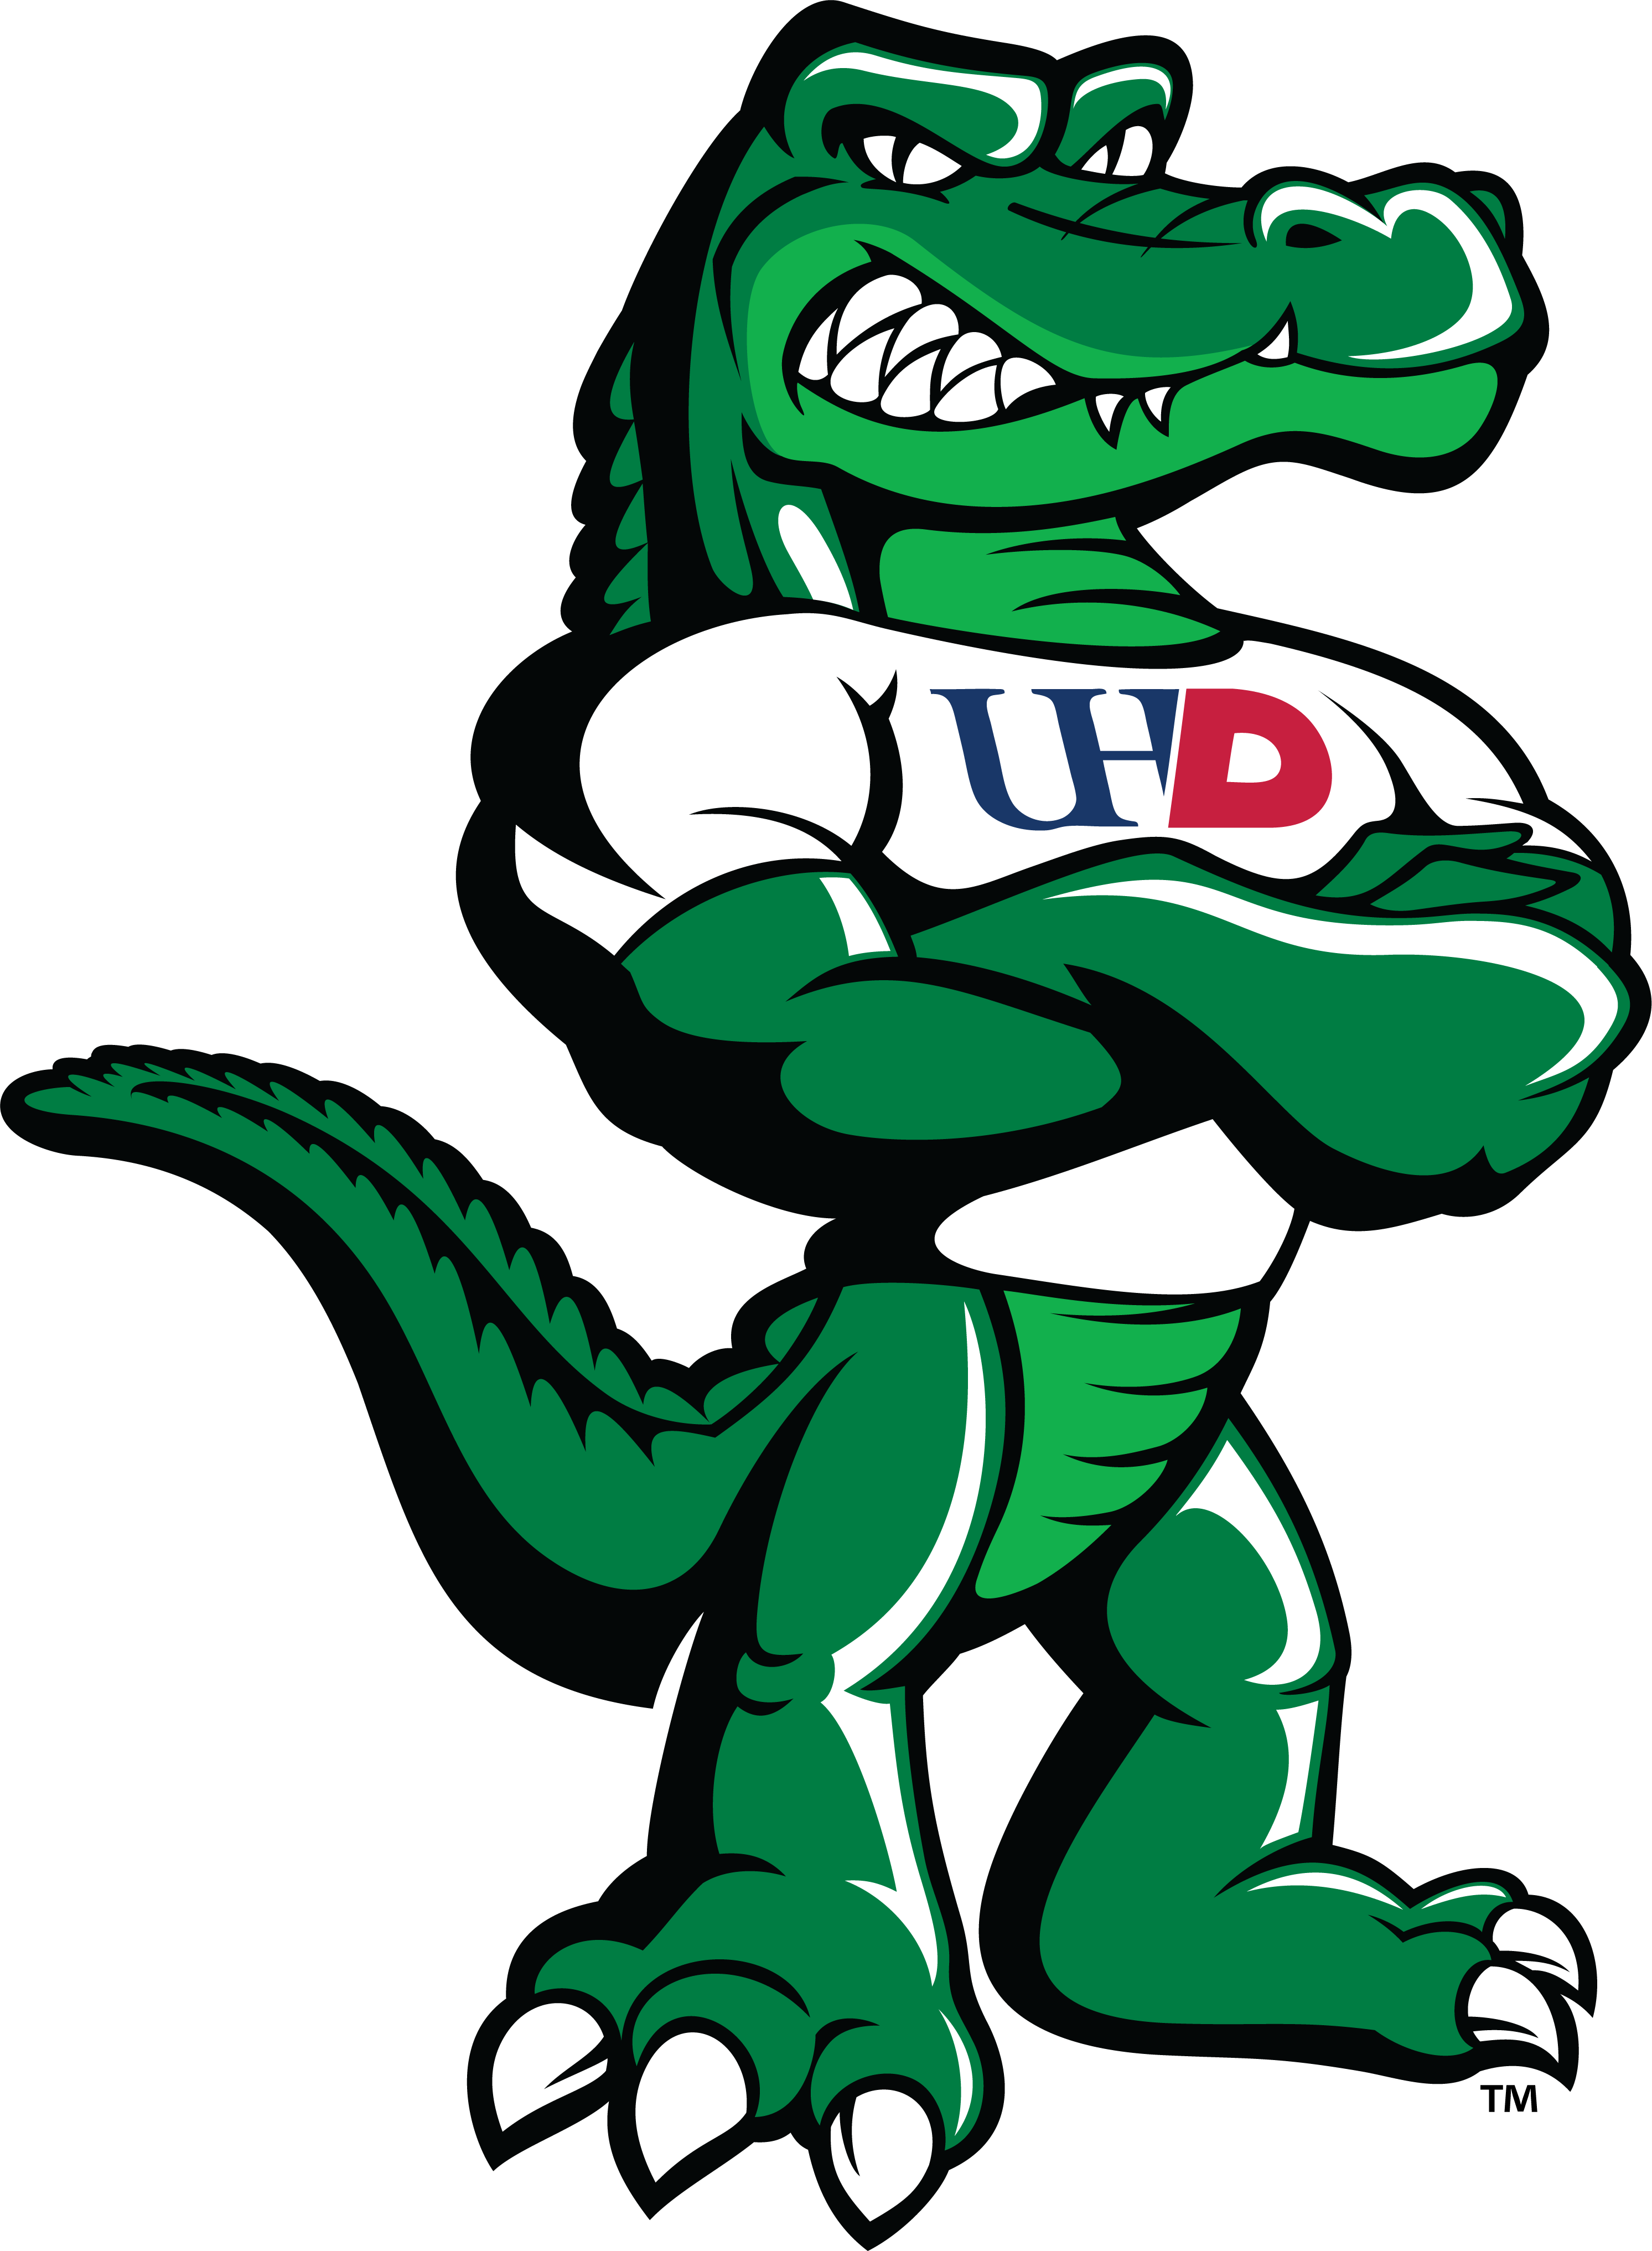 Gator mascot image